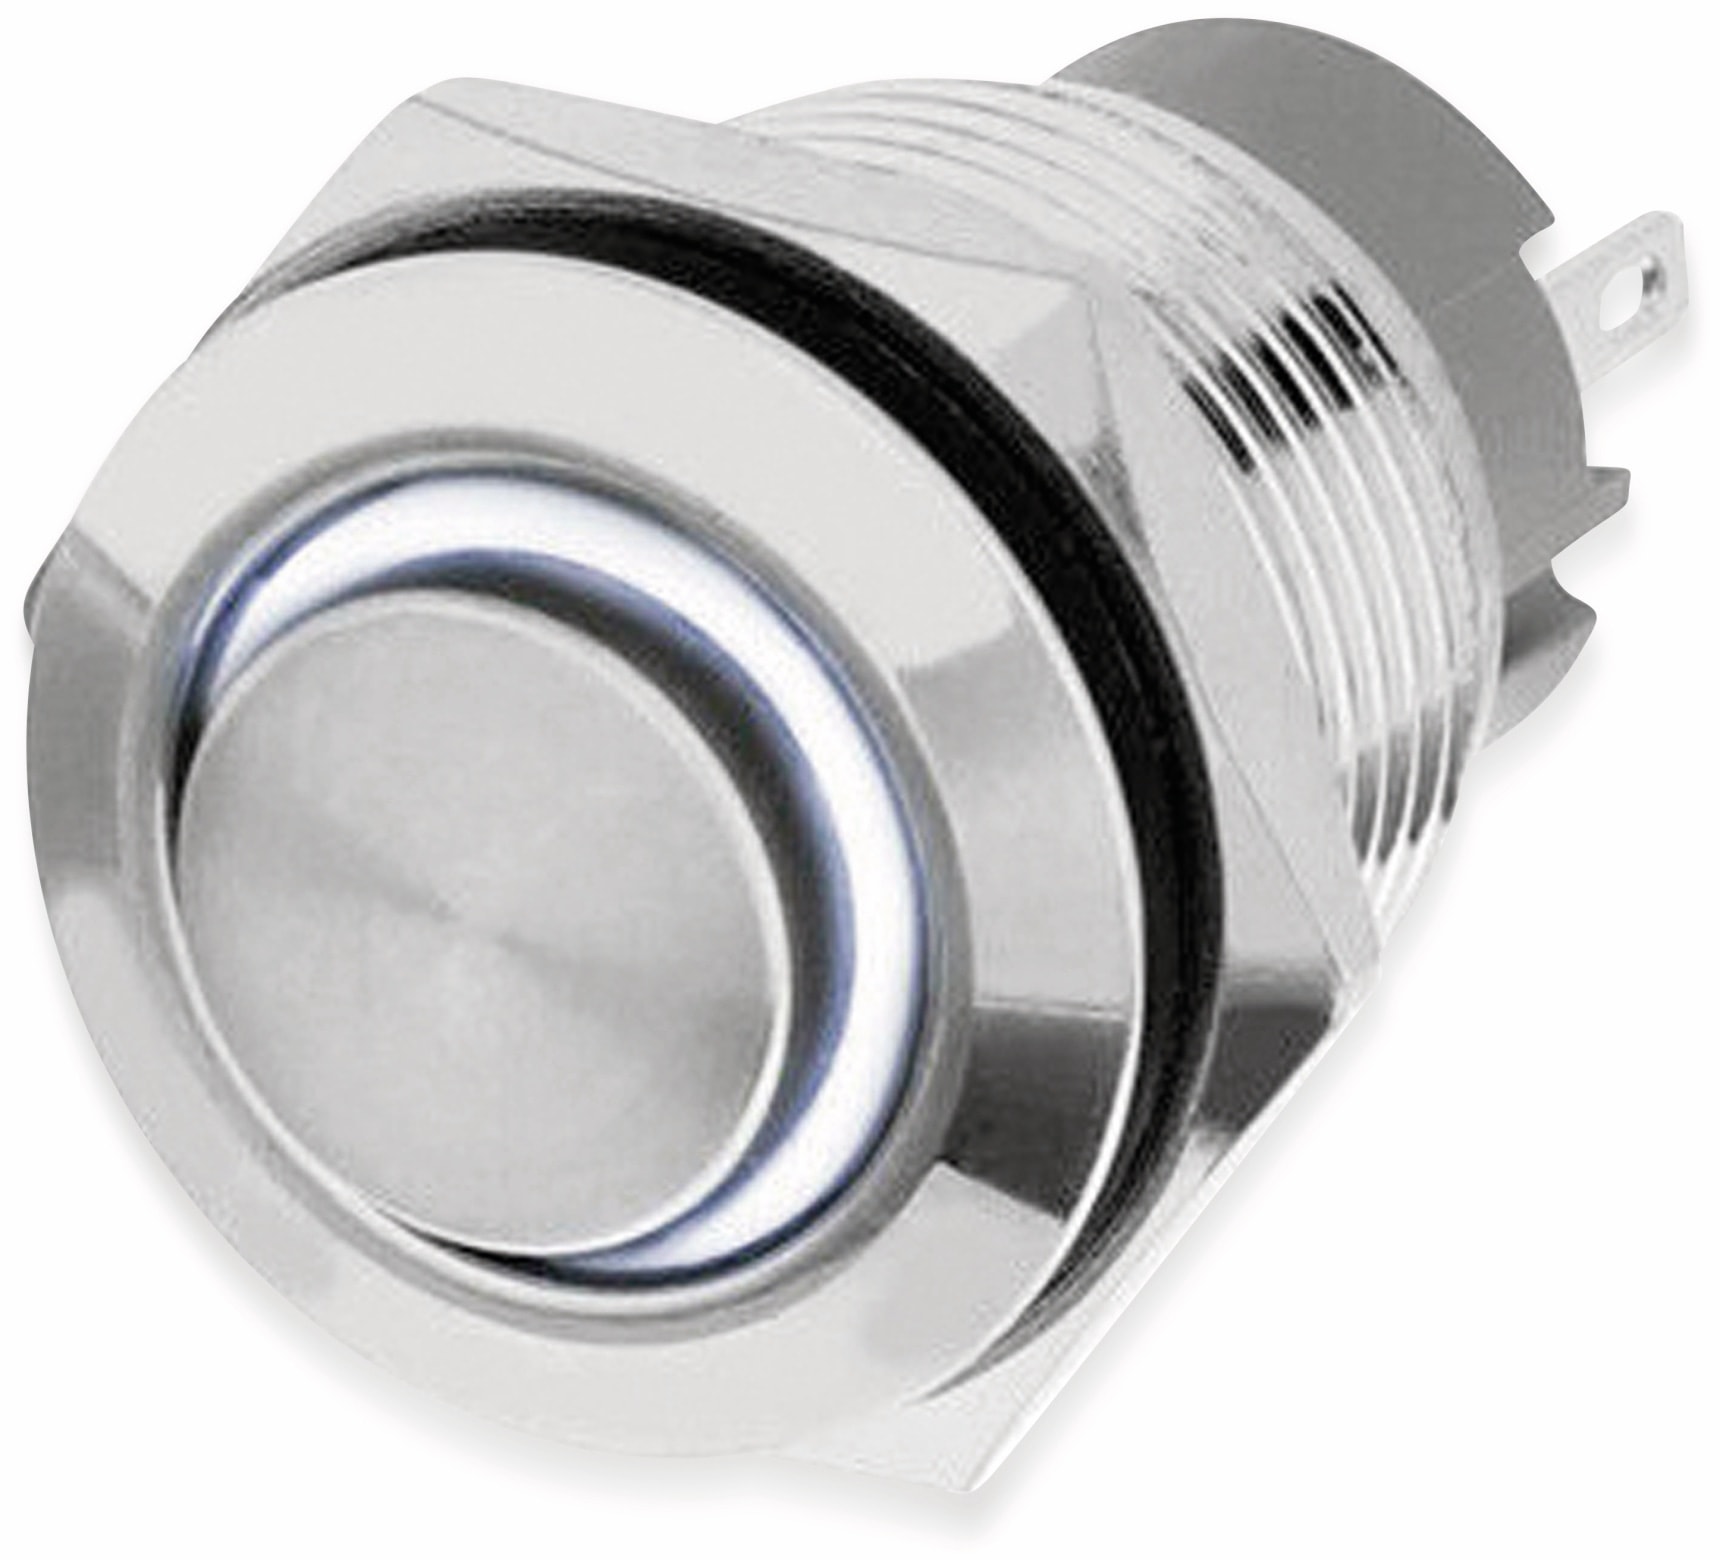 LED-Druckschalter, Ringbeleuchtung weiß 12 V, Ø16 mm, 5 A/48 V